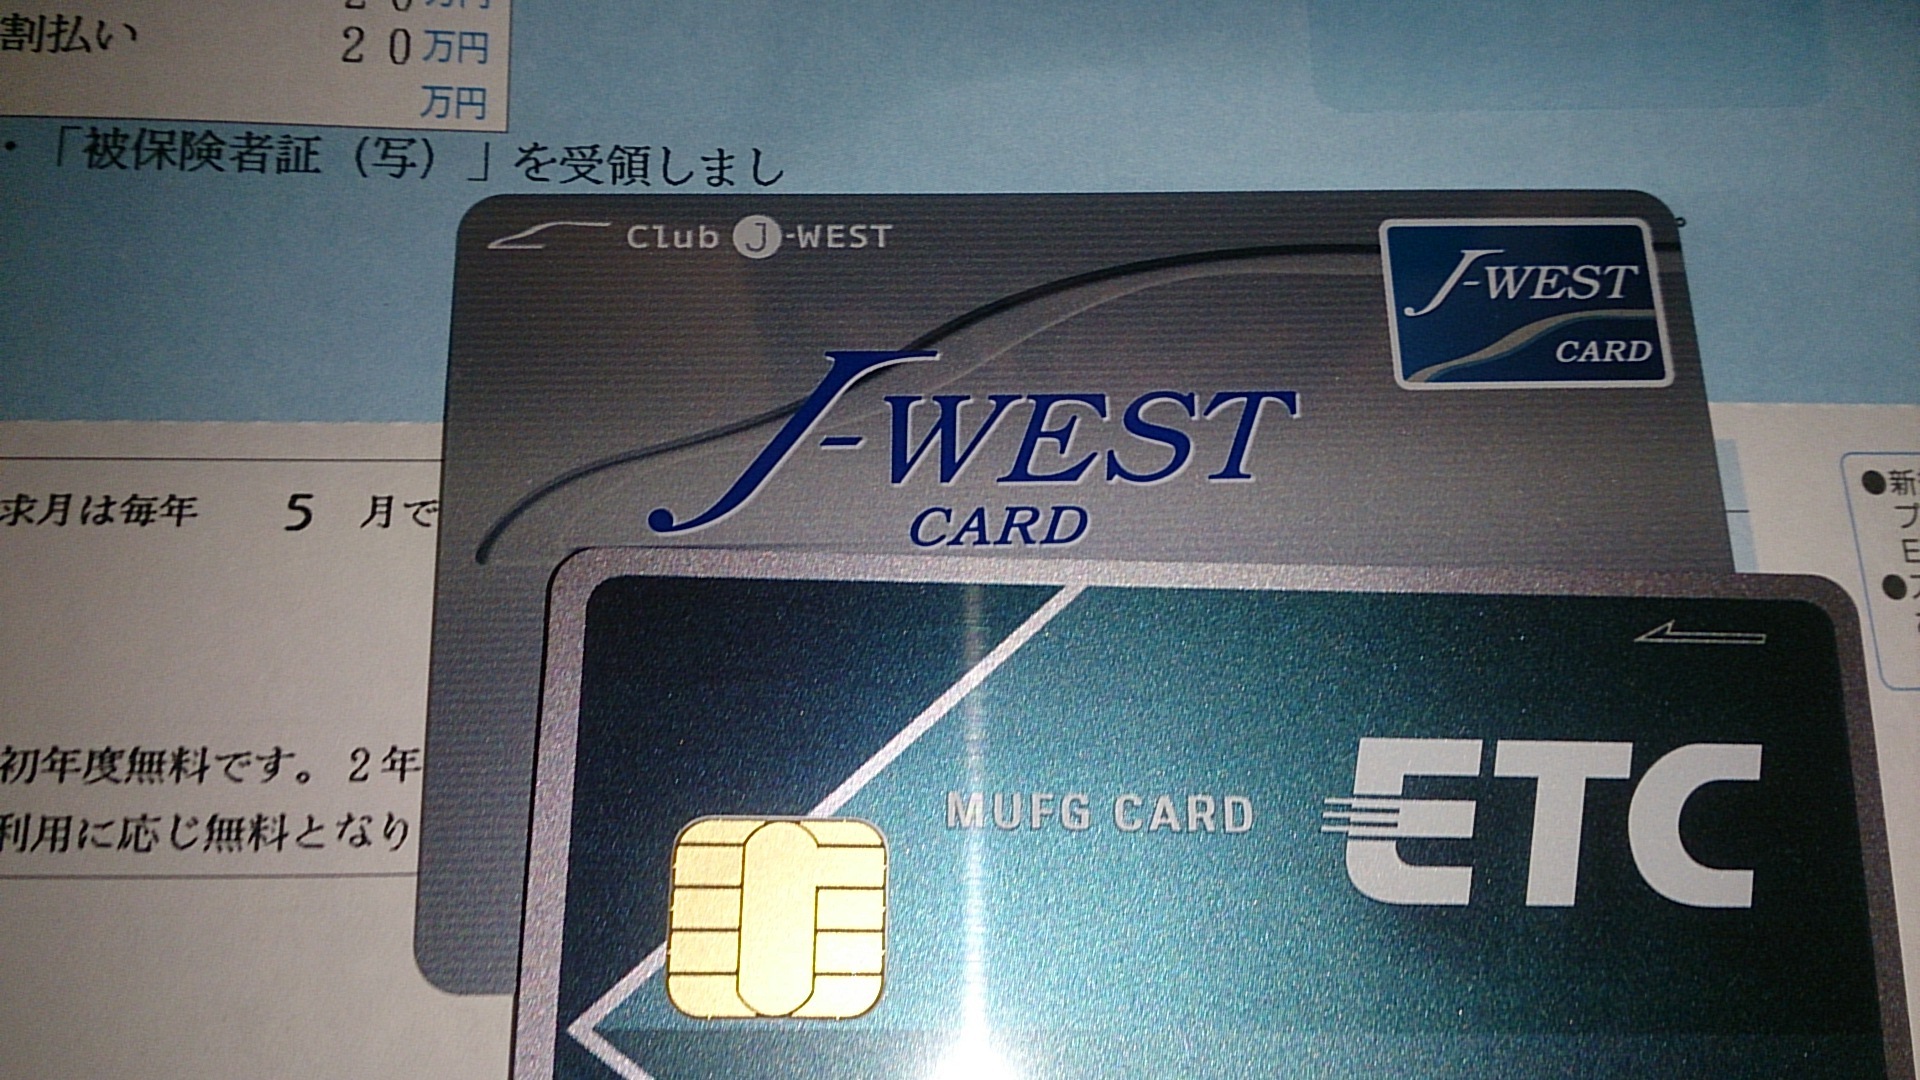 Jwest カード